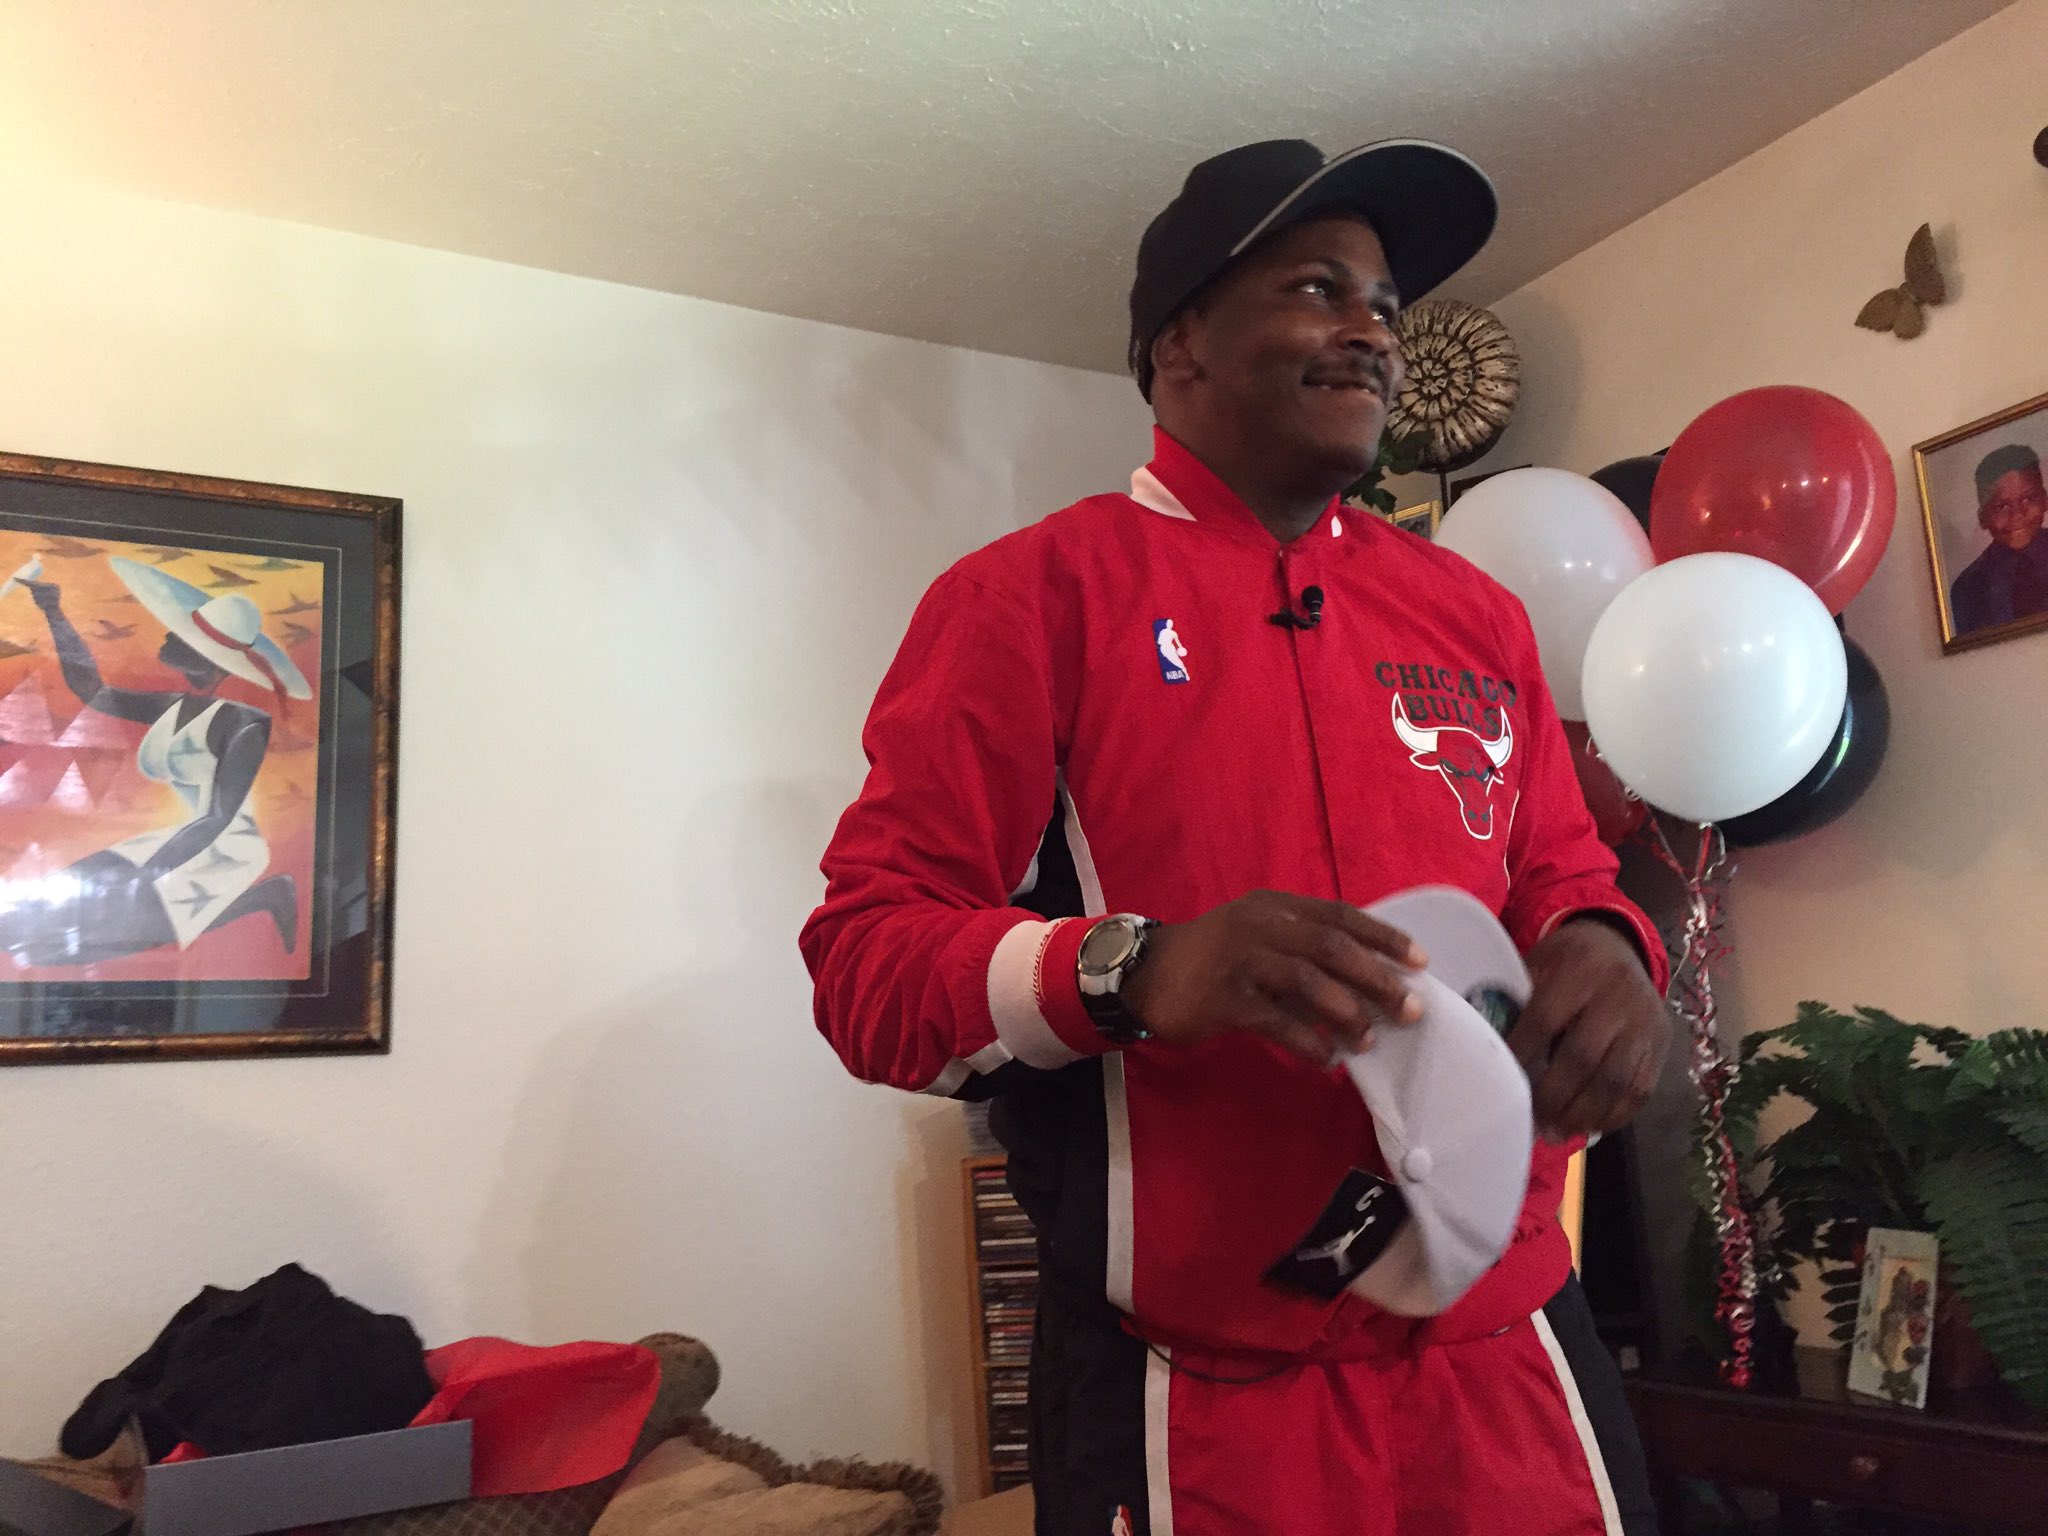 Jeffrey Harrison smiles as he opens the gifts Michael Jordan sent him. (Photo via @DarnayTripp)